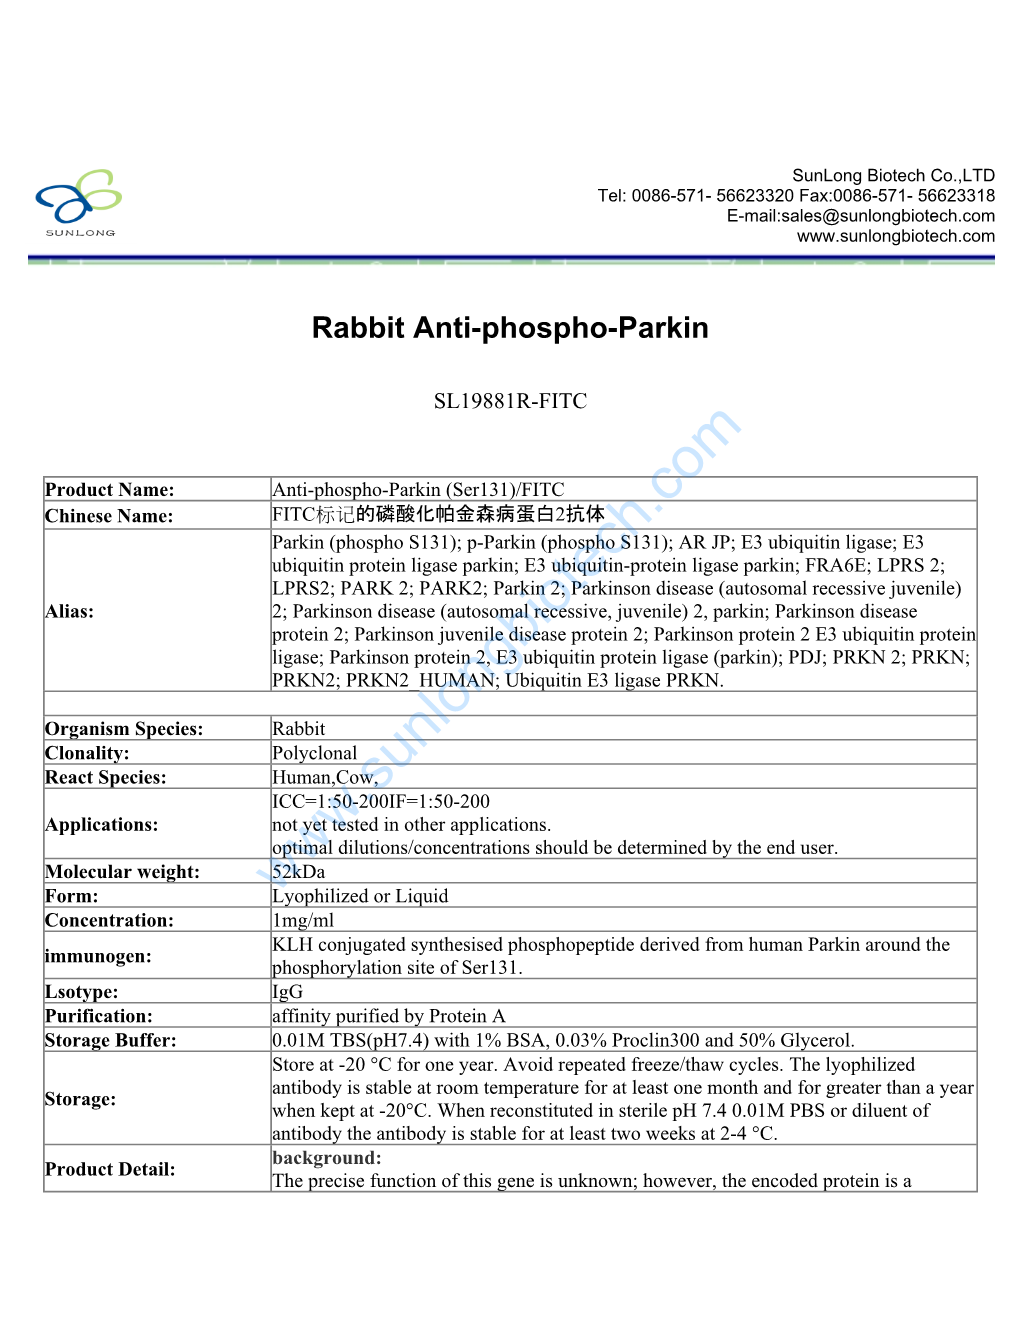 Rabbit Anti-Phospho-Parkin-SL19881R-FITC